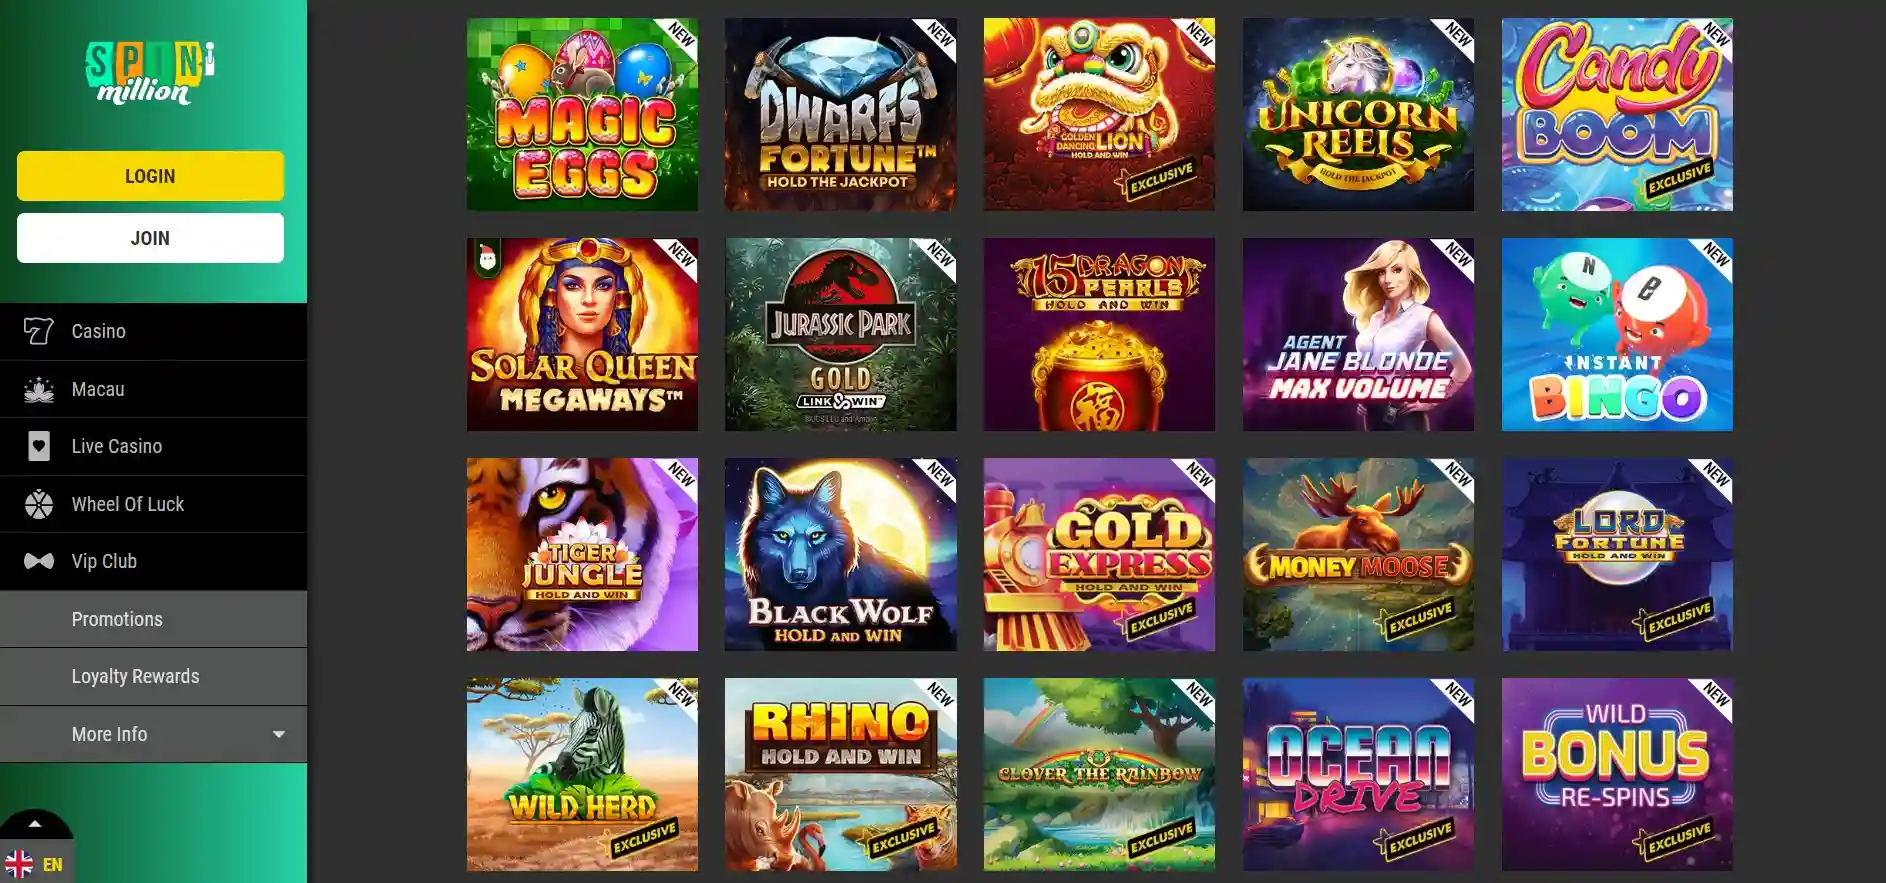 Spin Million online slot games